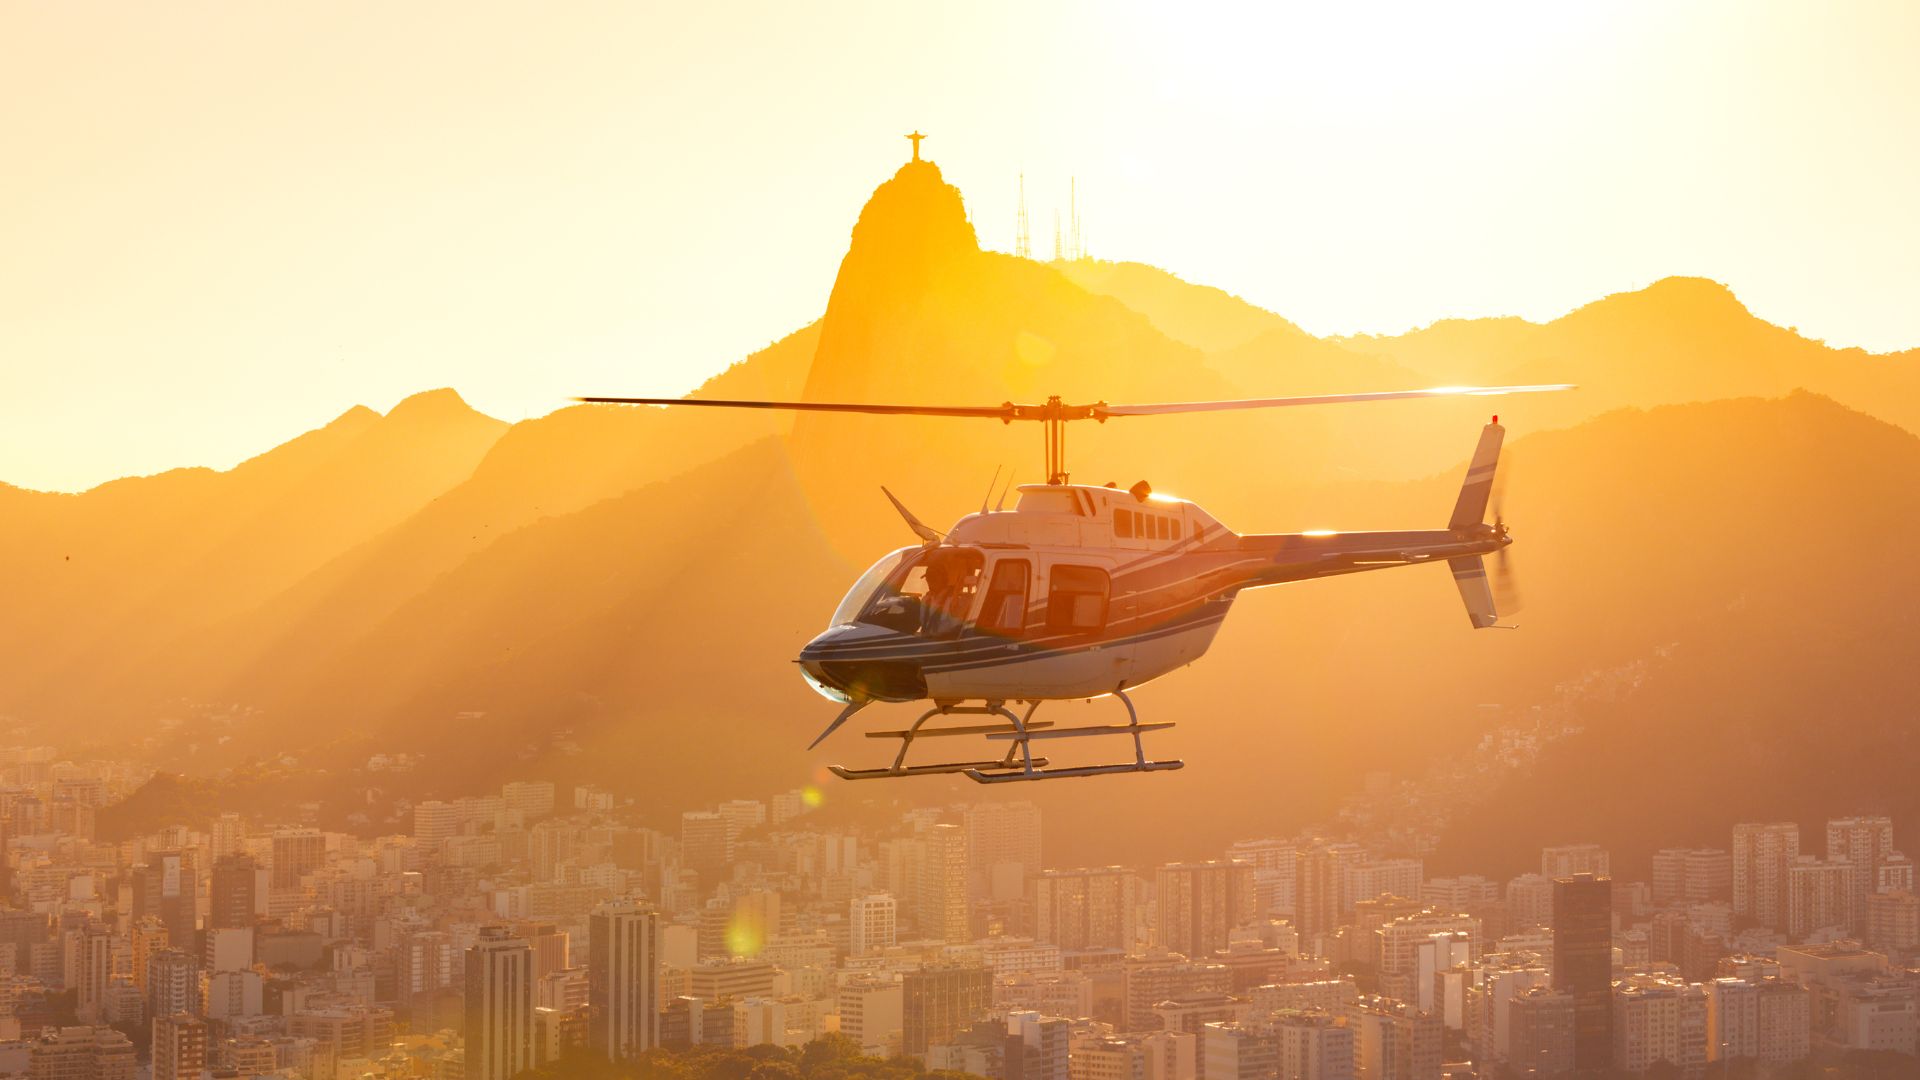 Passeio de helicóptero no Rio de Janeiro: descubra as maravilhas do céu carioca